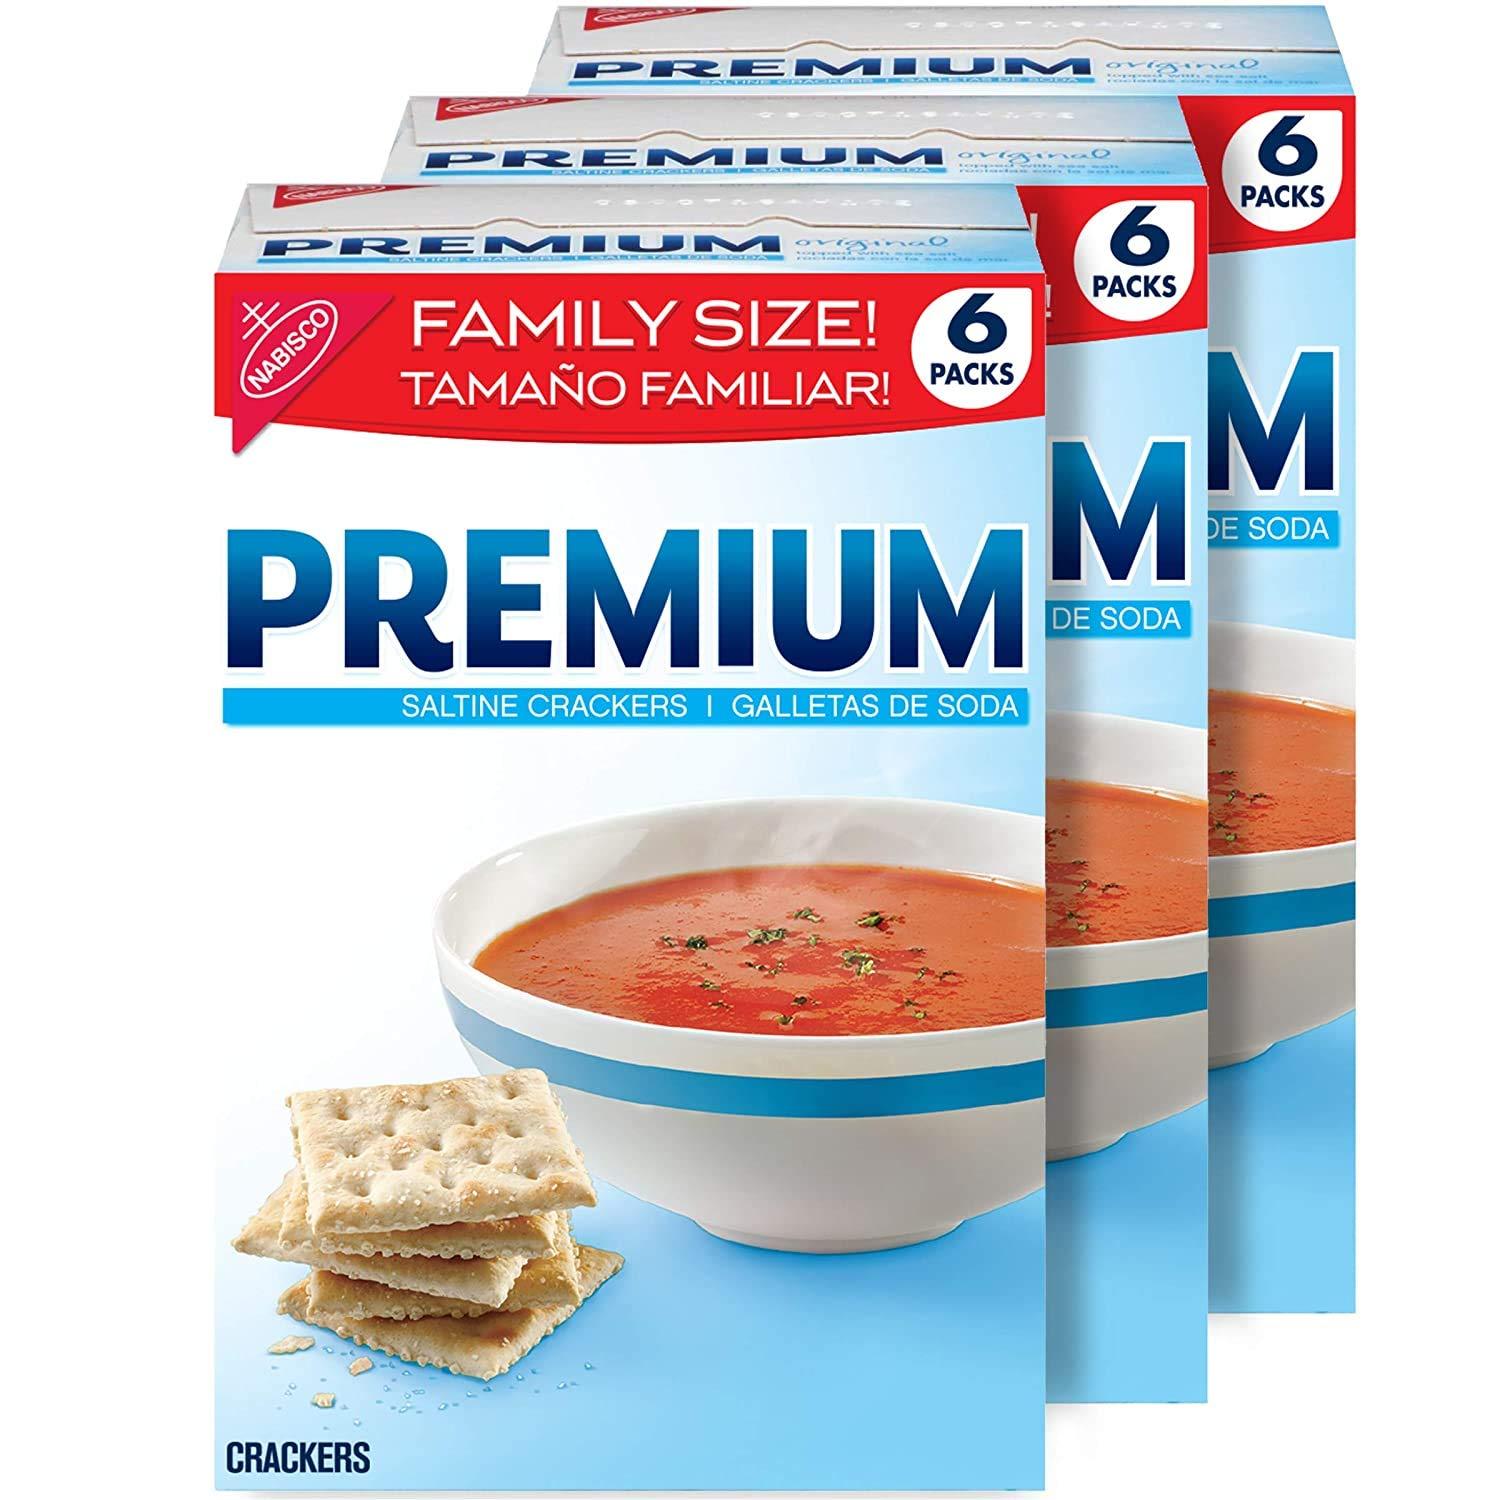 3 Premium Saltine Crackers for $7.15 Shipped